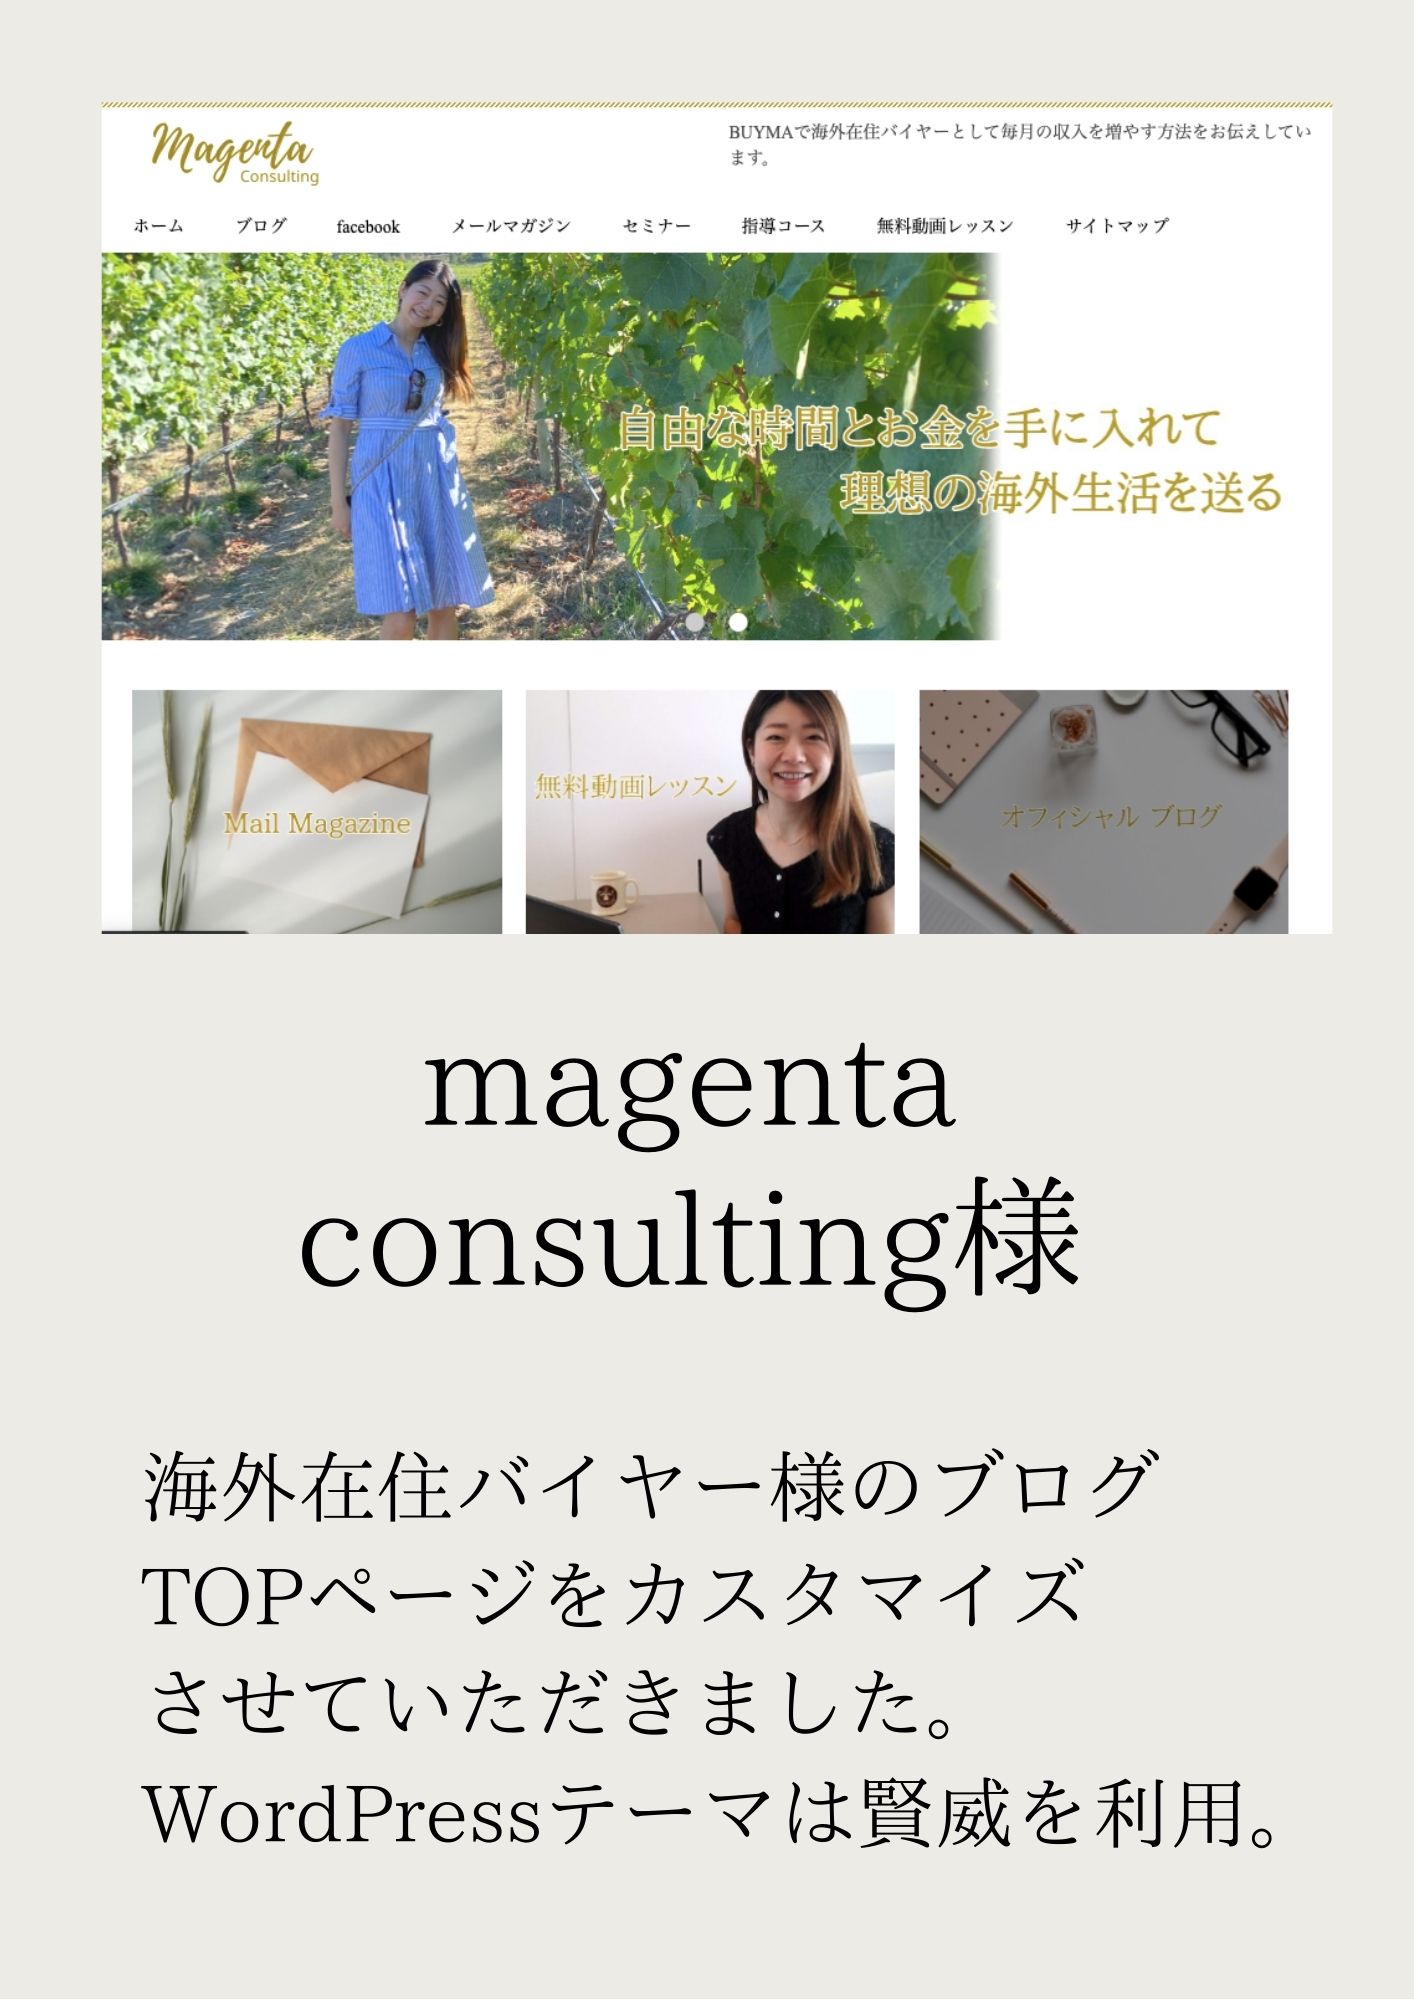 majenta consulting・ブログサイト